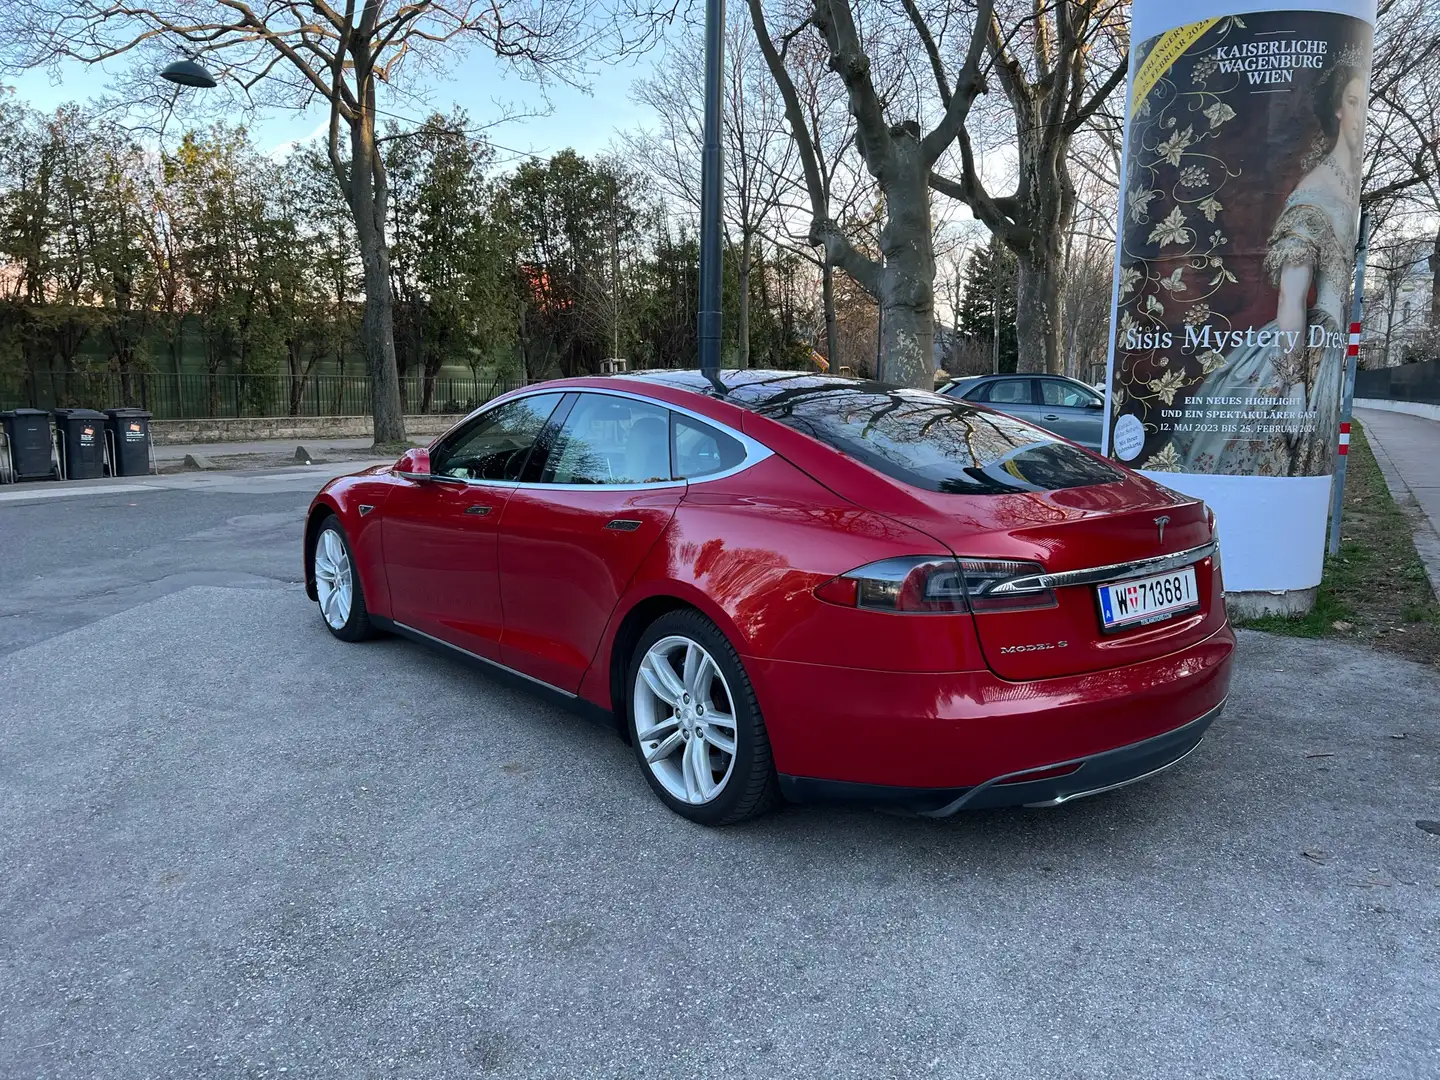 Tesla Model S 85. Kostenloses Supercharging Rot - 2